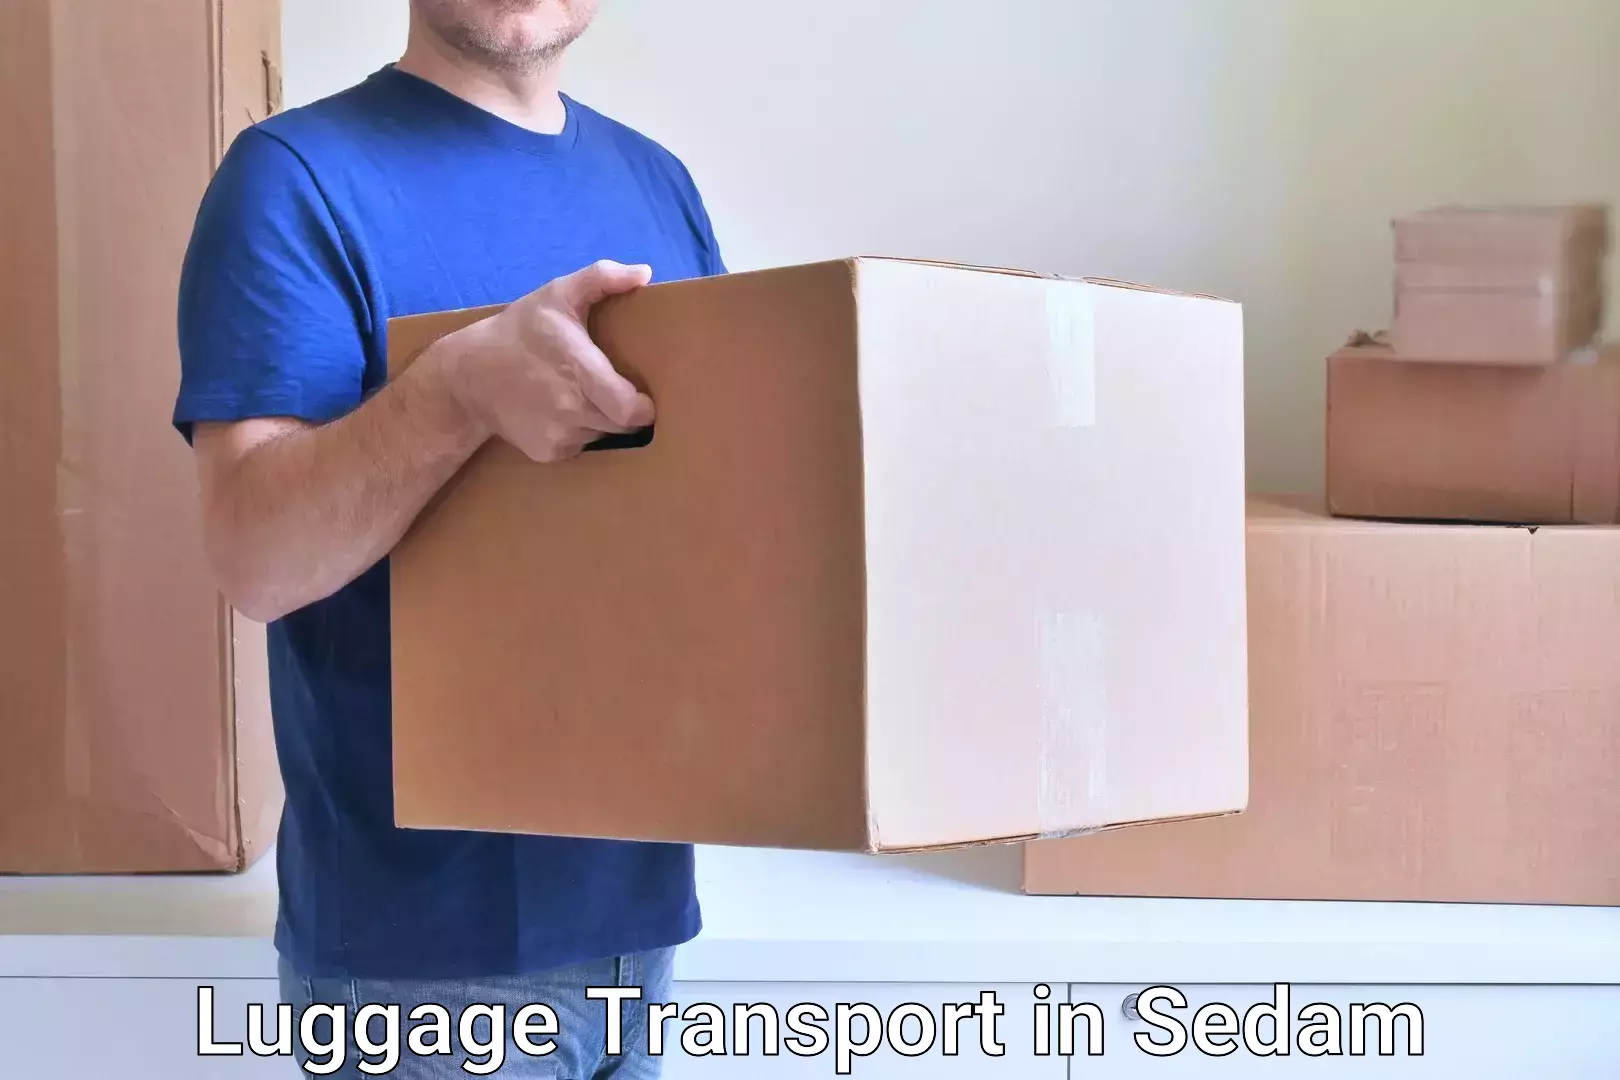 Luggage transport deals in Sedam